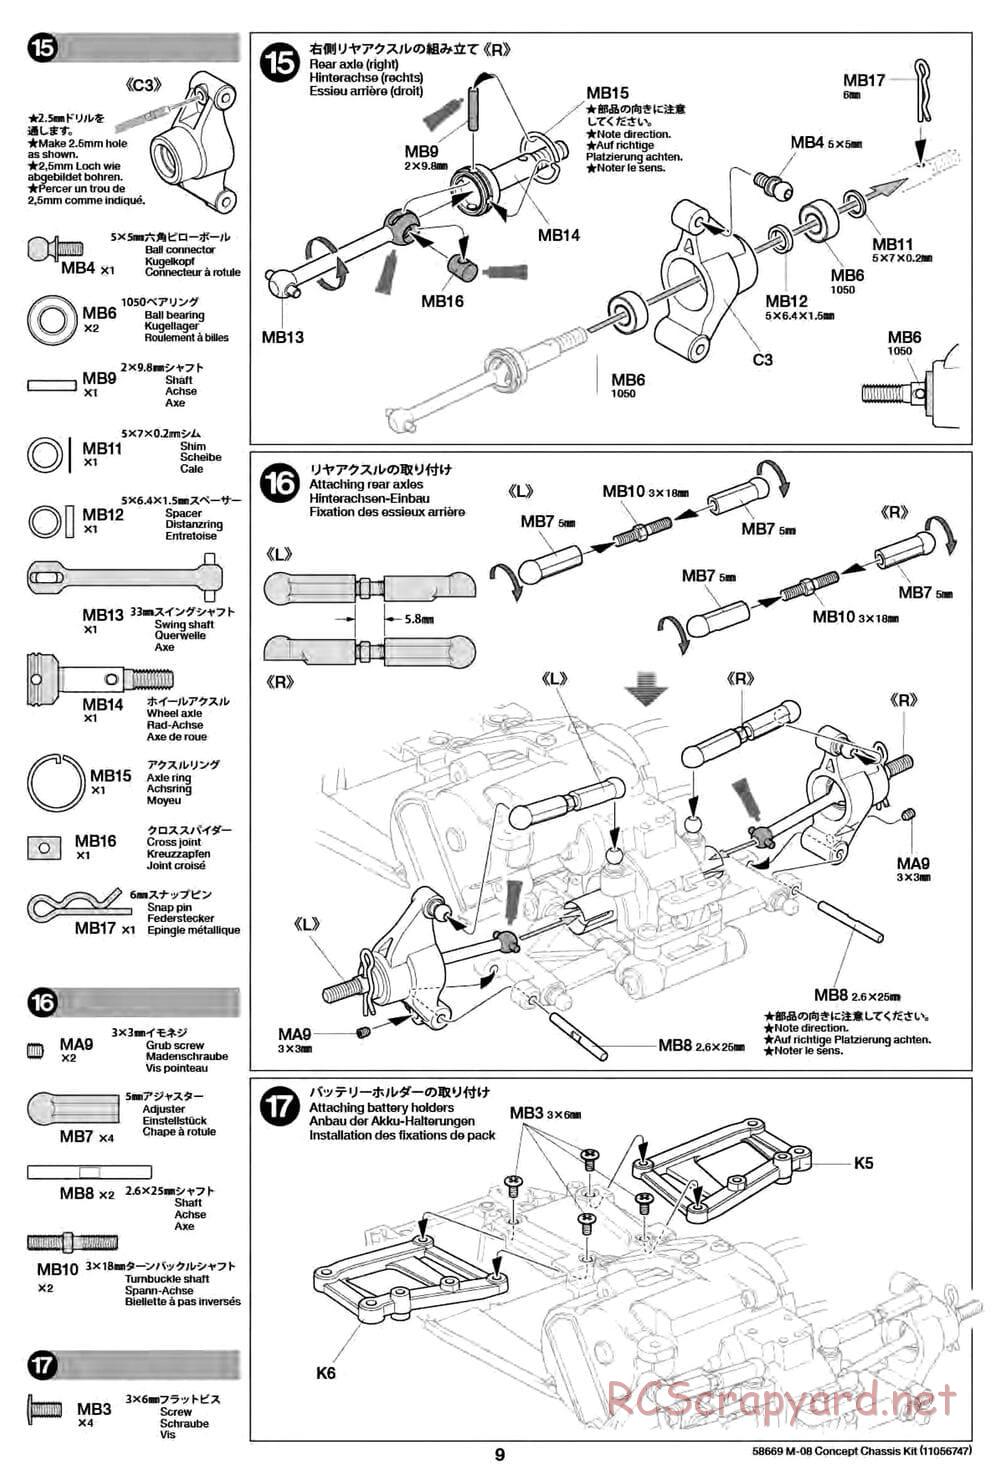 Tamiya - M-08 Concept Chassis - Manual - Page 9